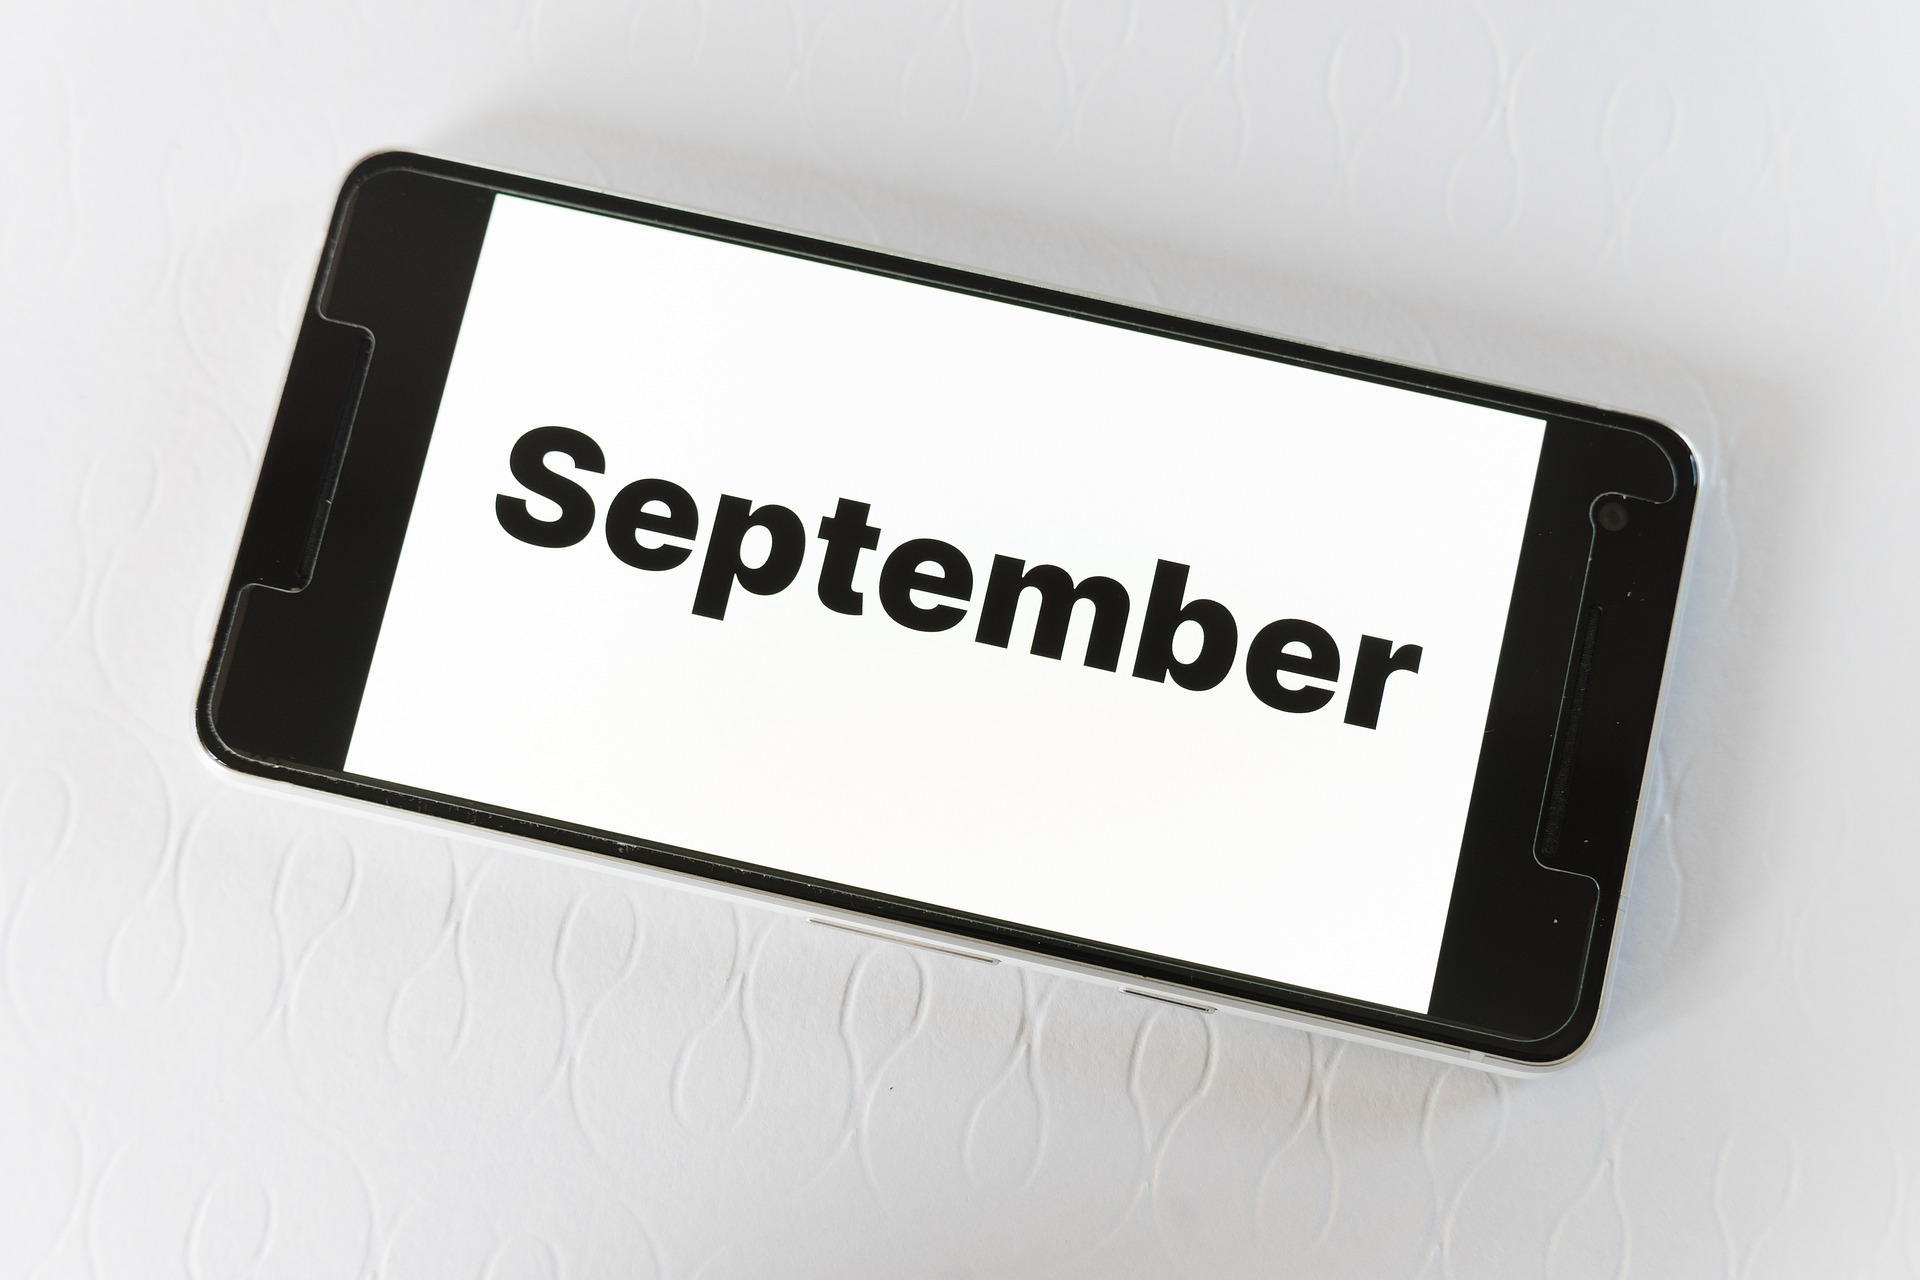 What's happening in September?